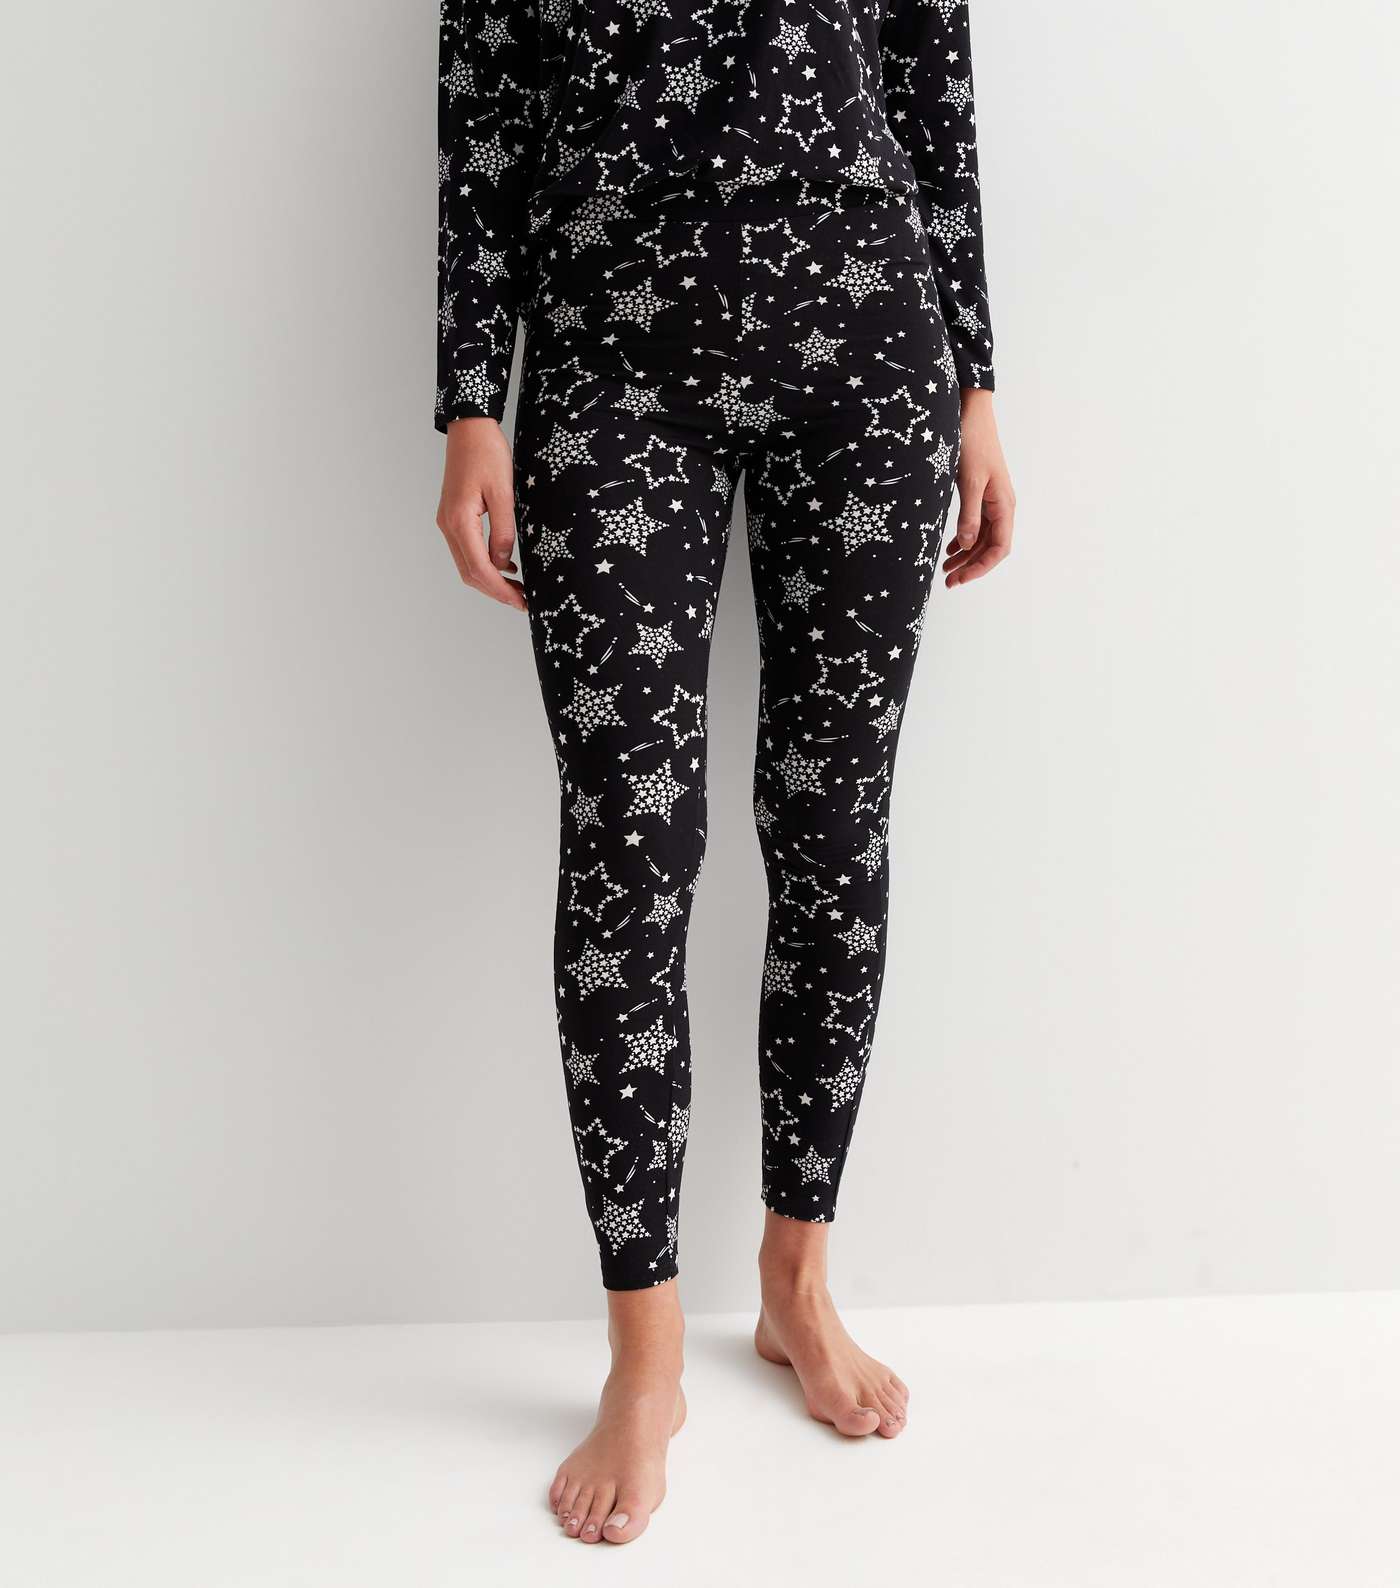 Black Soft Touch Legging Pyjama Set with Star Print Image 3